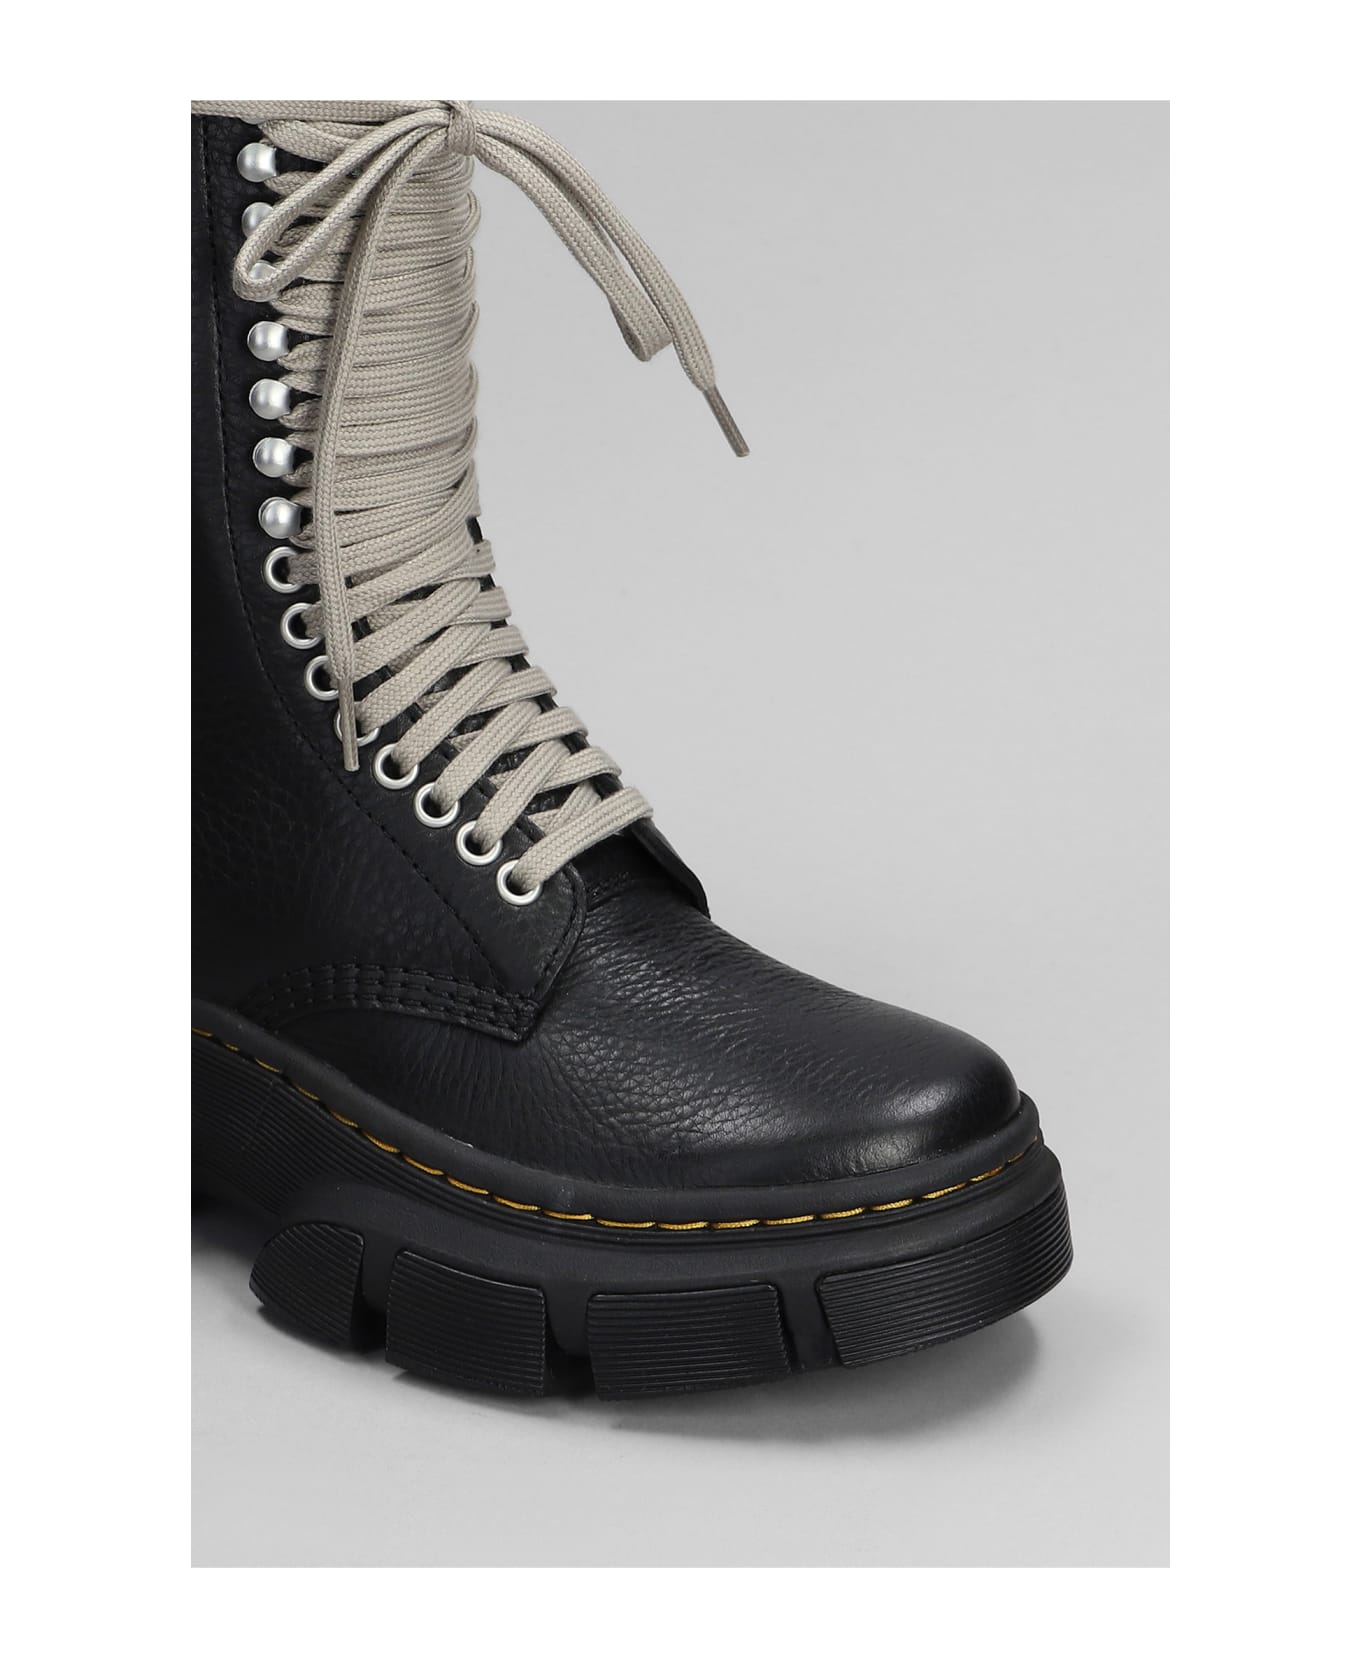 Rick Owens x Dr. Martens Dmxl Length Boot Combat Boots In Black Leather - black